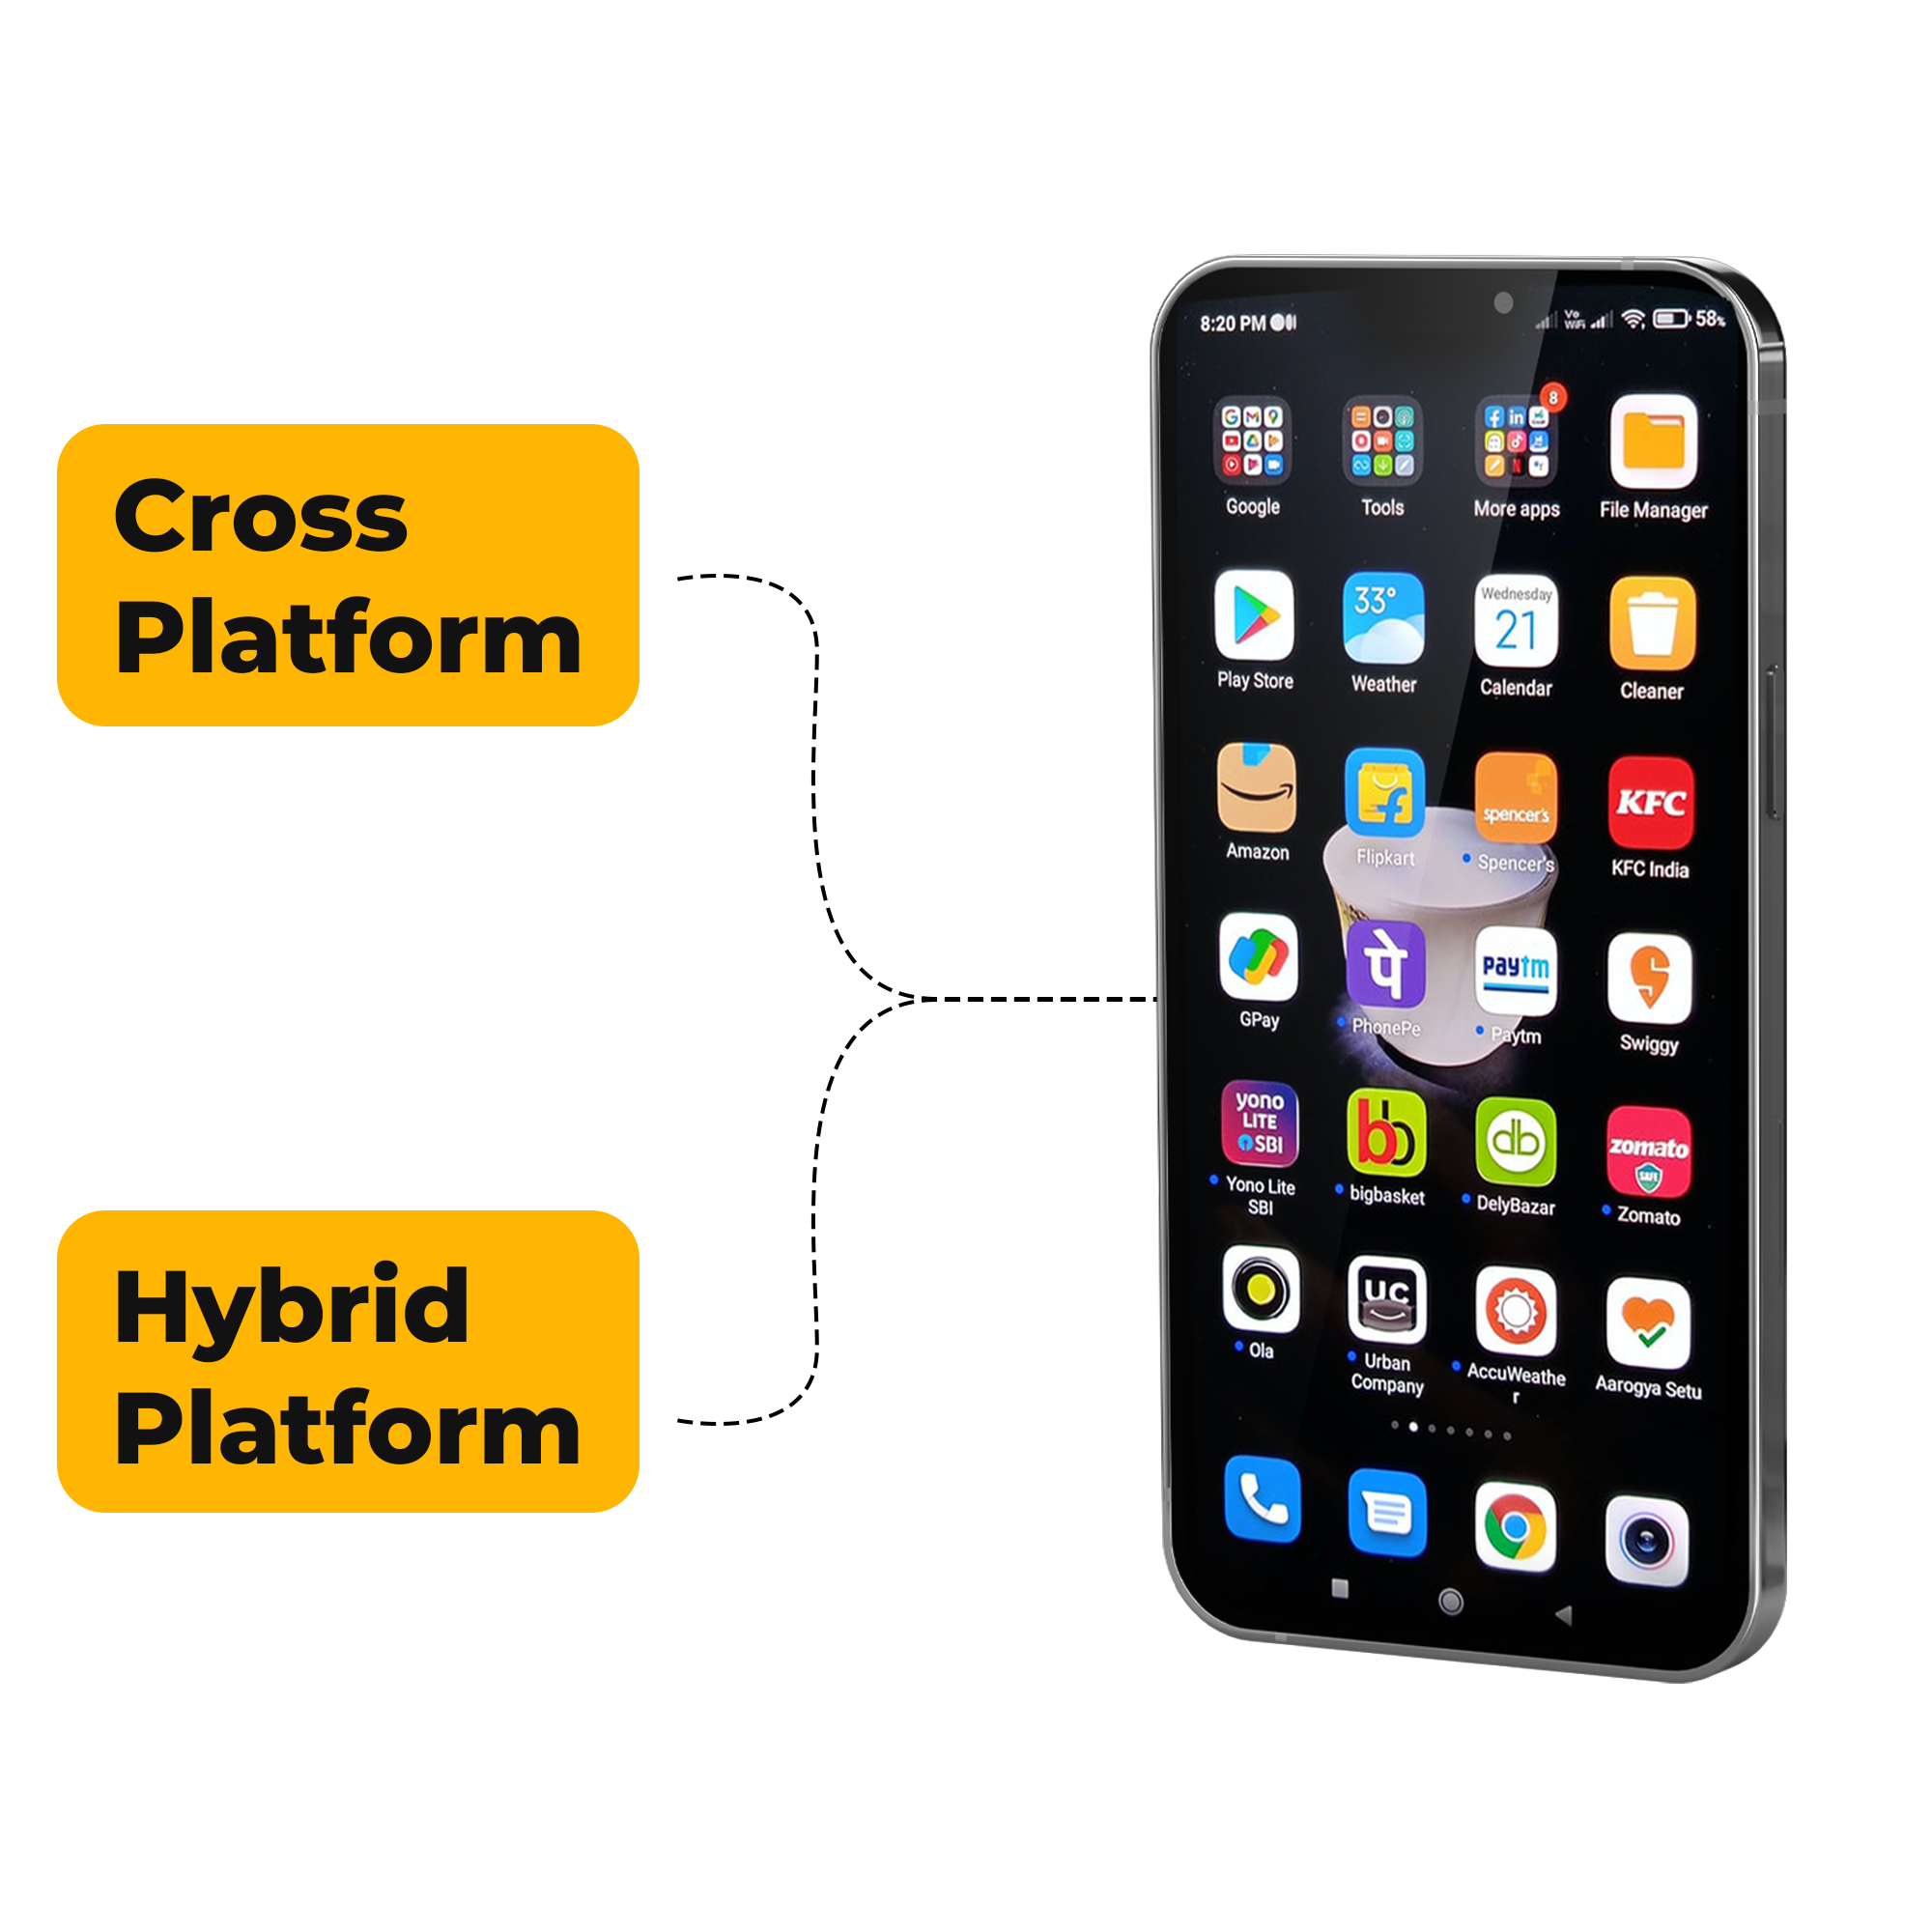 Cross platform and hybrid apps